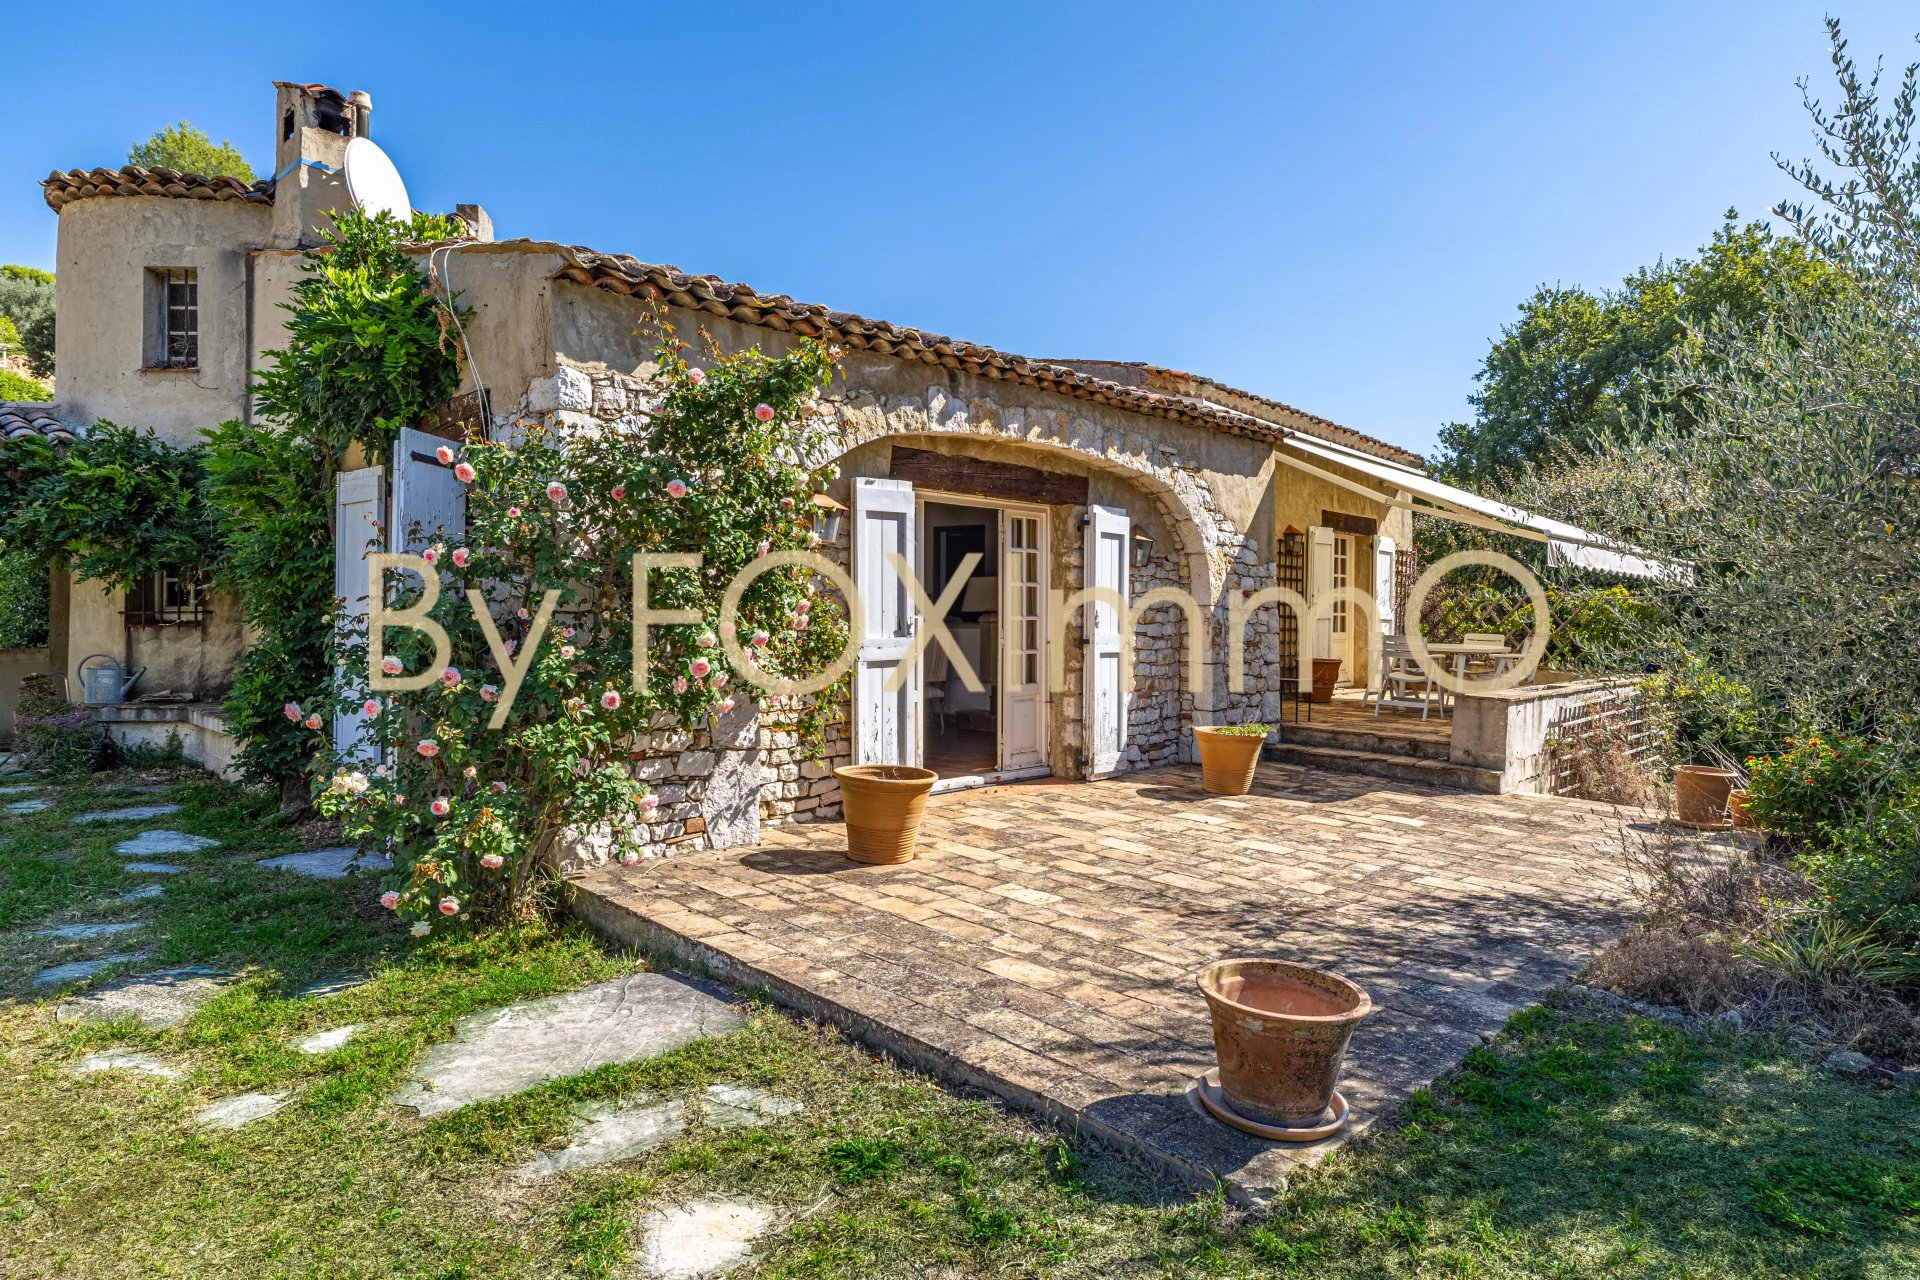 Provençal standalone villa, infinity pool, flat garden, residential neighborhood.